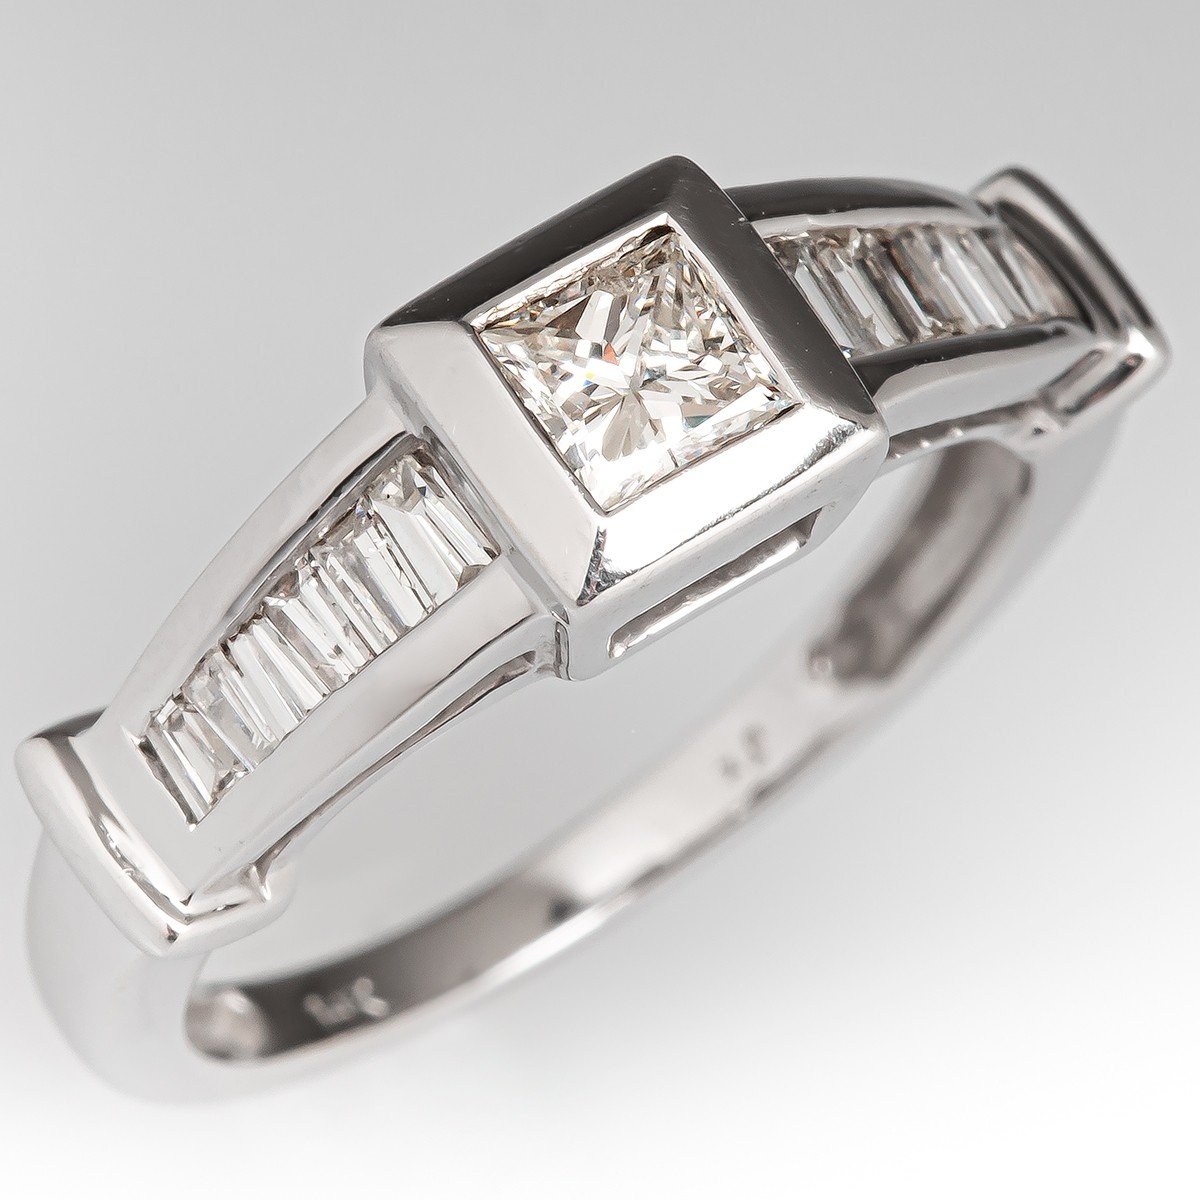 1.75ctw Princess Cut Channel Set Diamond Engagement Ring 4.75